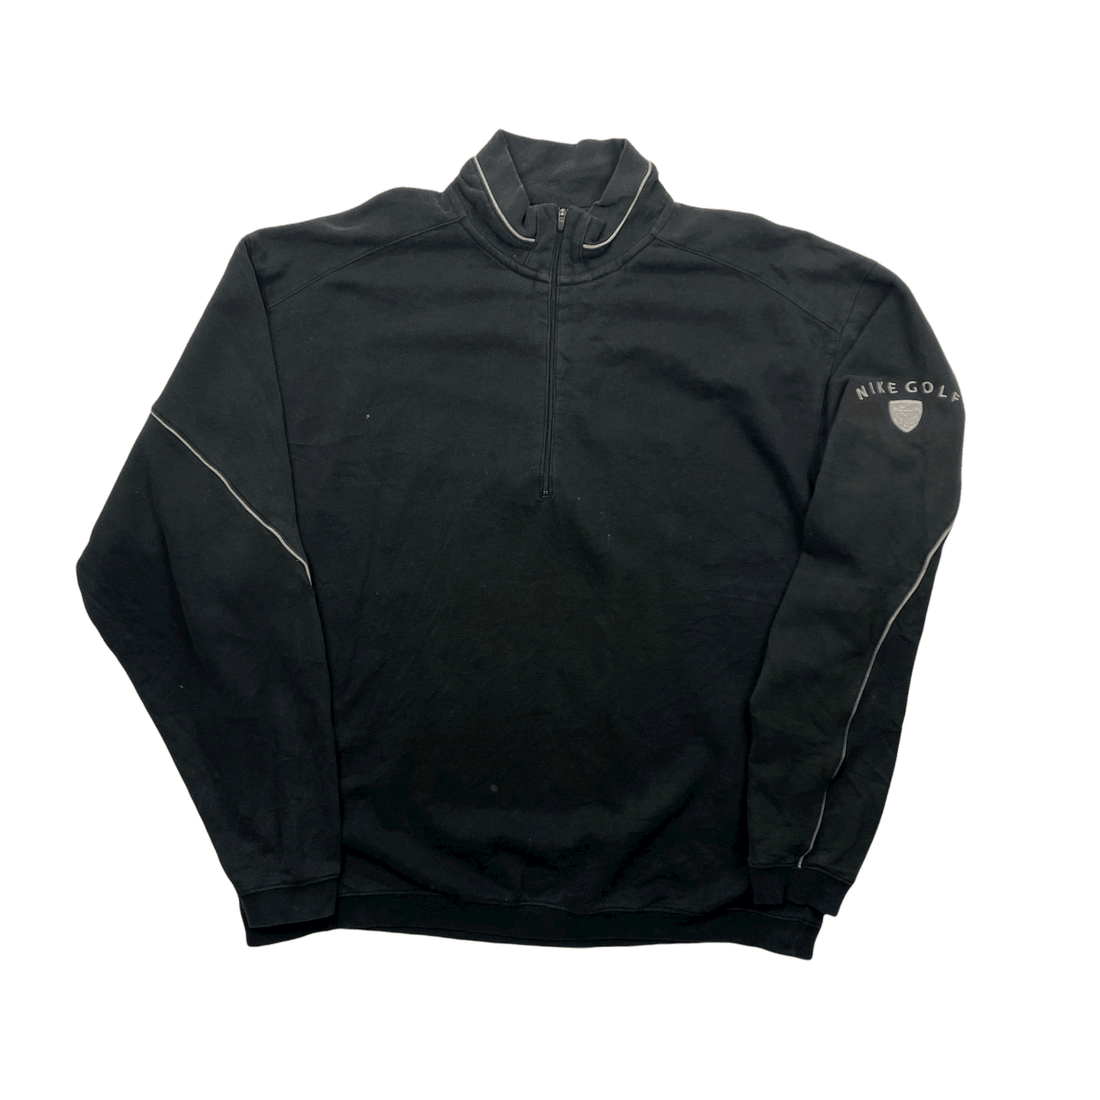 Vintage 90s Black Nike Golf Quarter Zip Sweatshirt - Extra Large - The Streetwear Studio